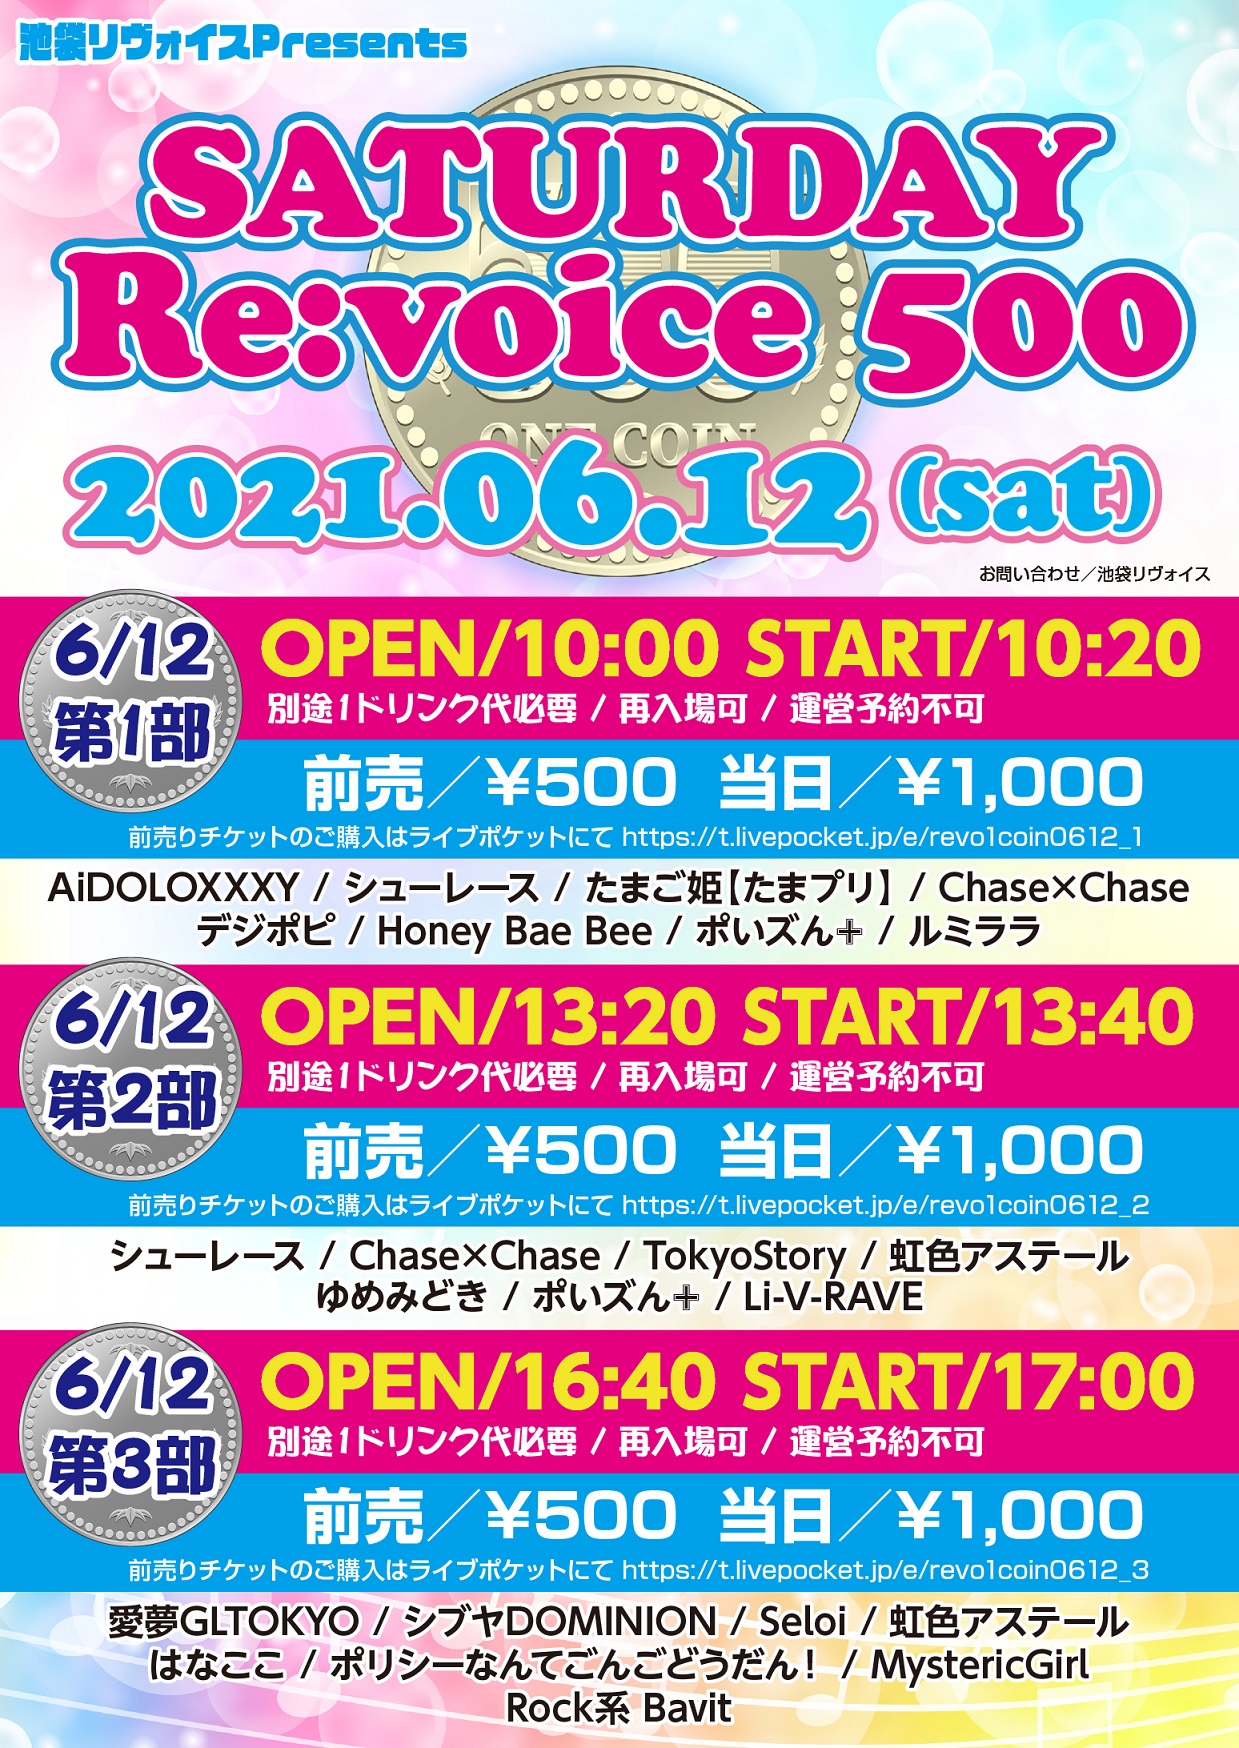 【第三部】SATURDAY Re:voice 500